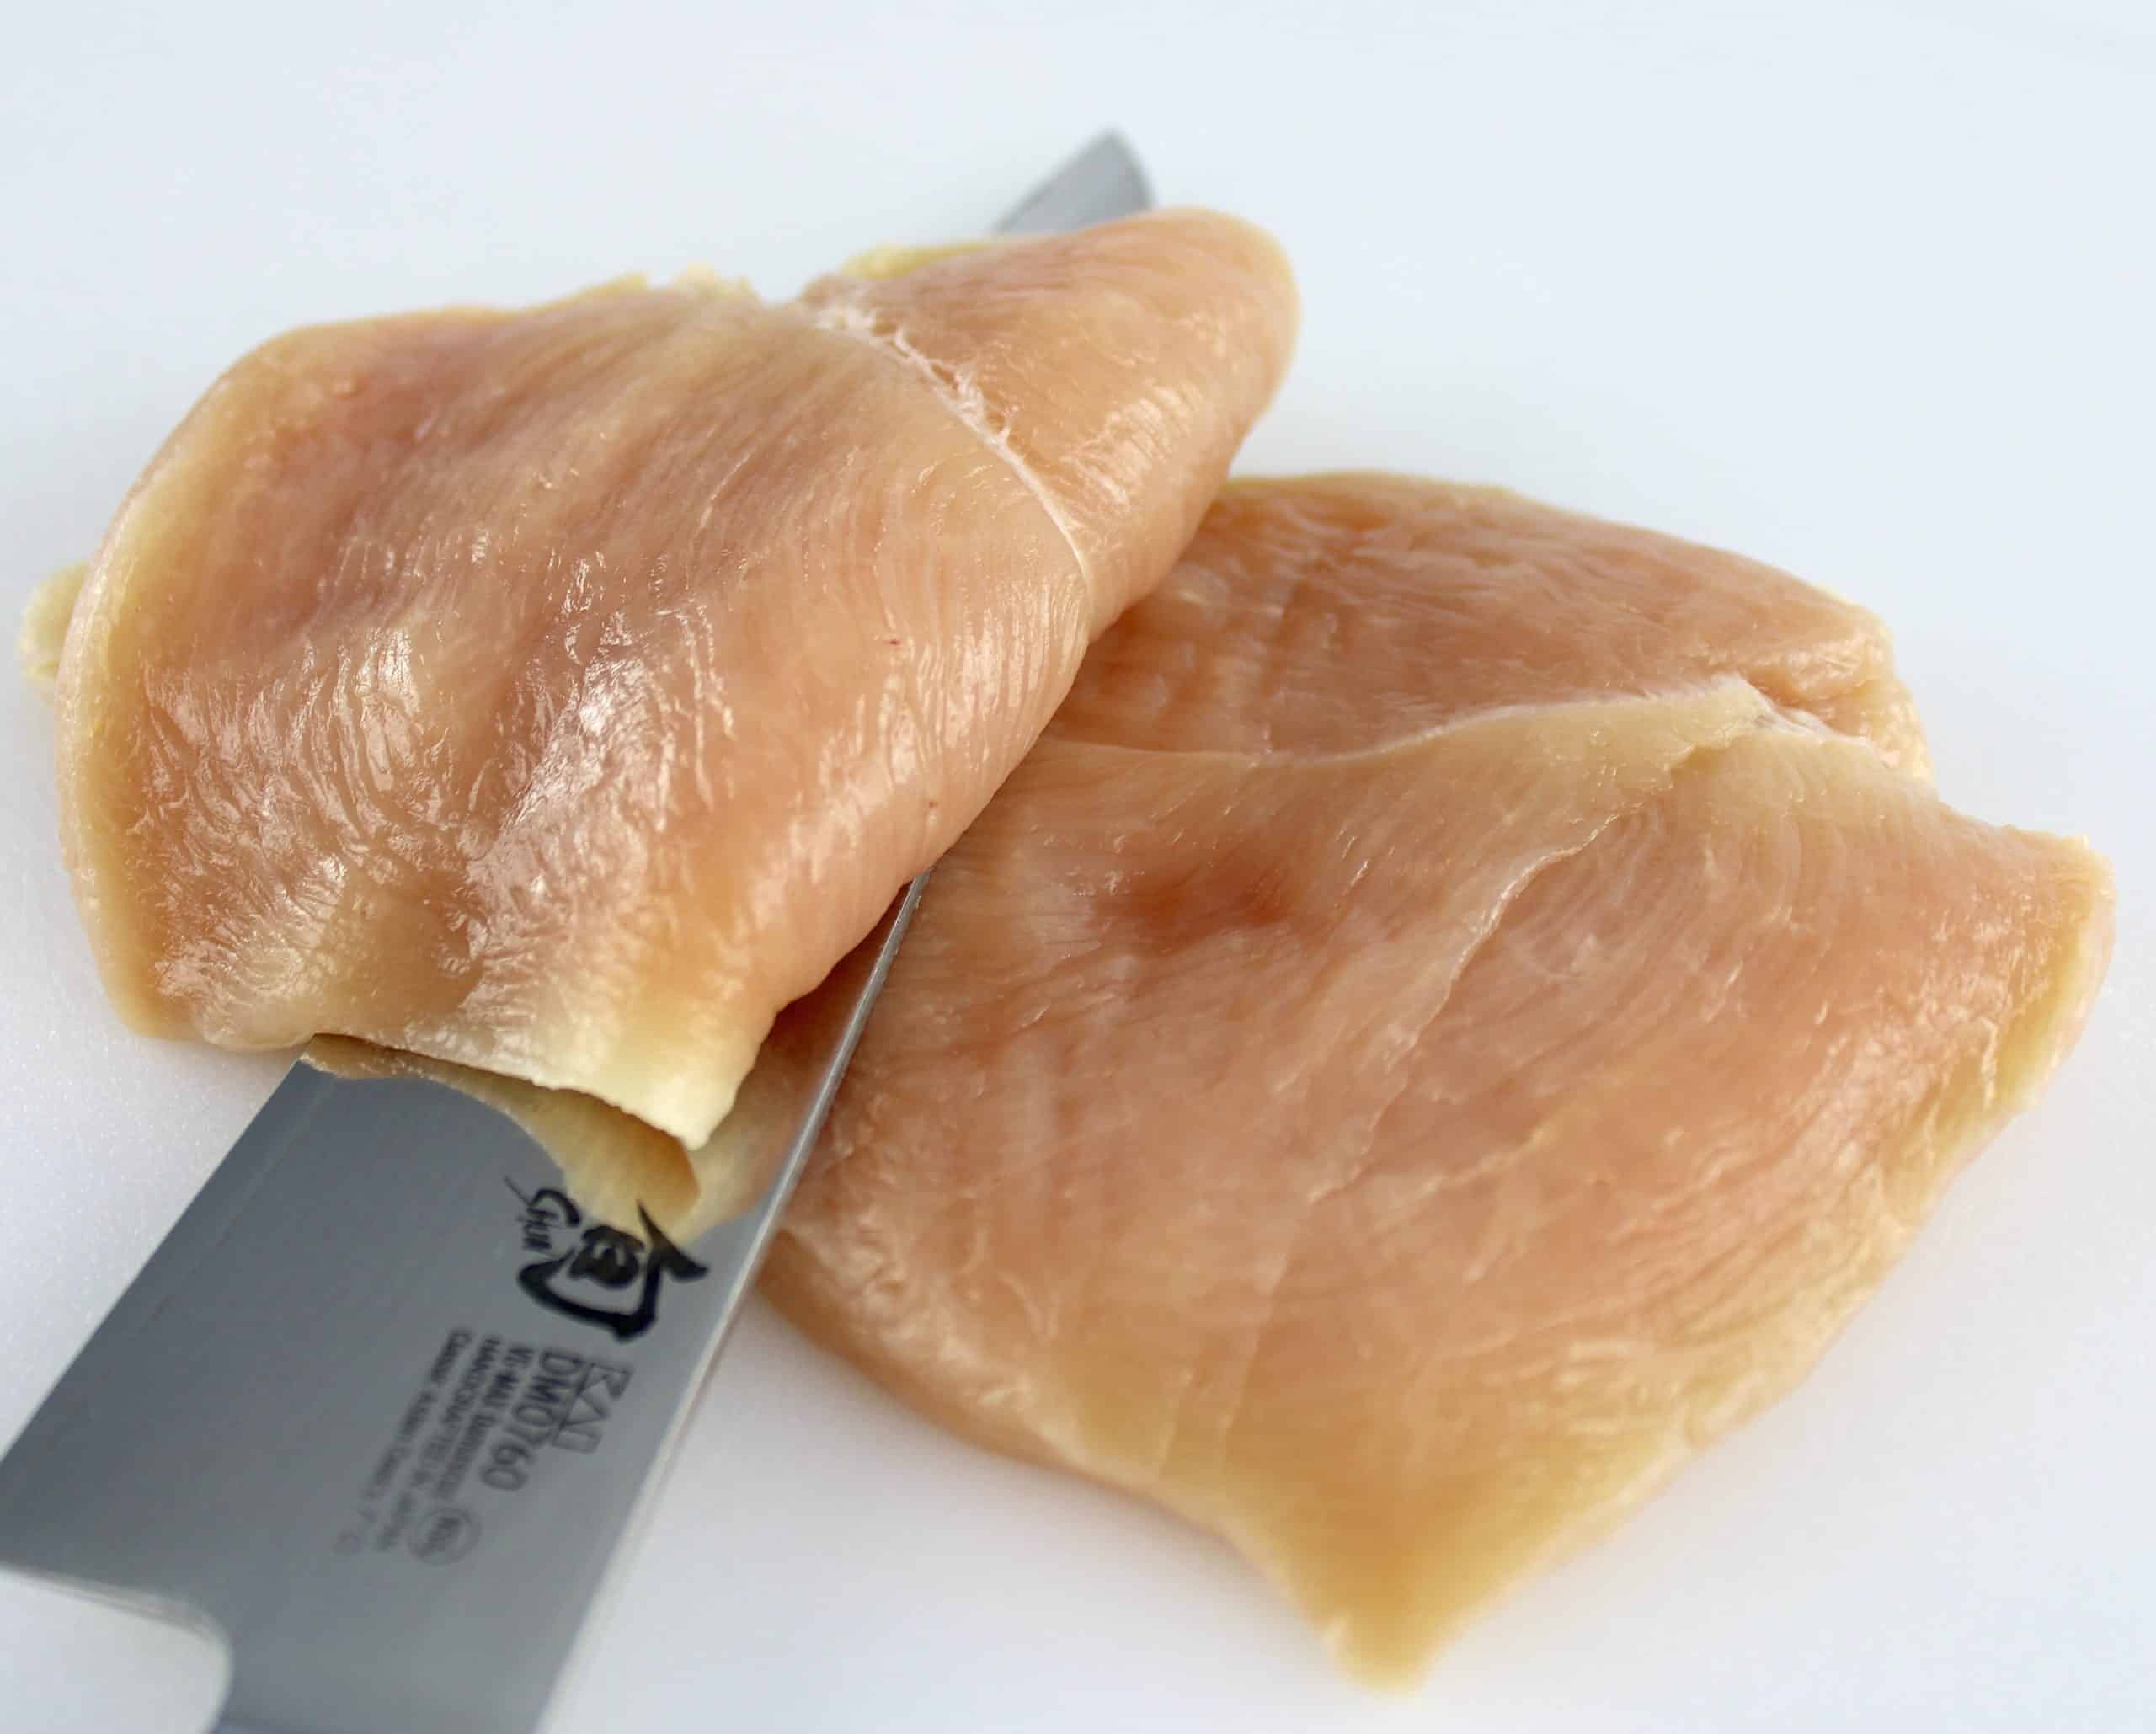 chicken breast being sliced in half on white cutting board